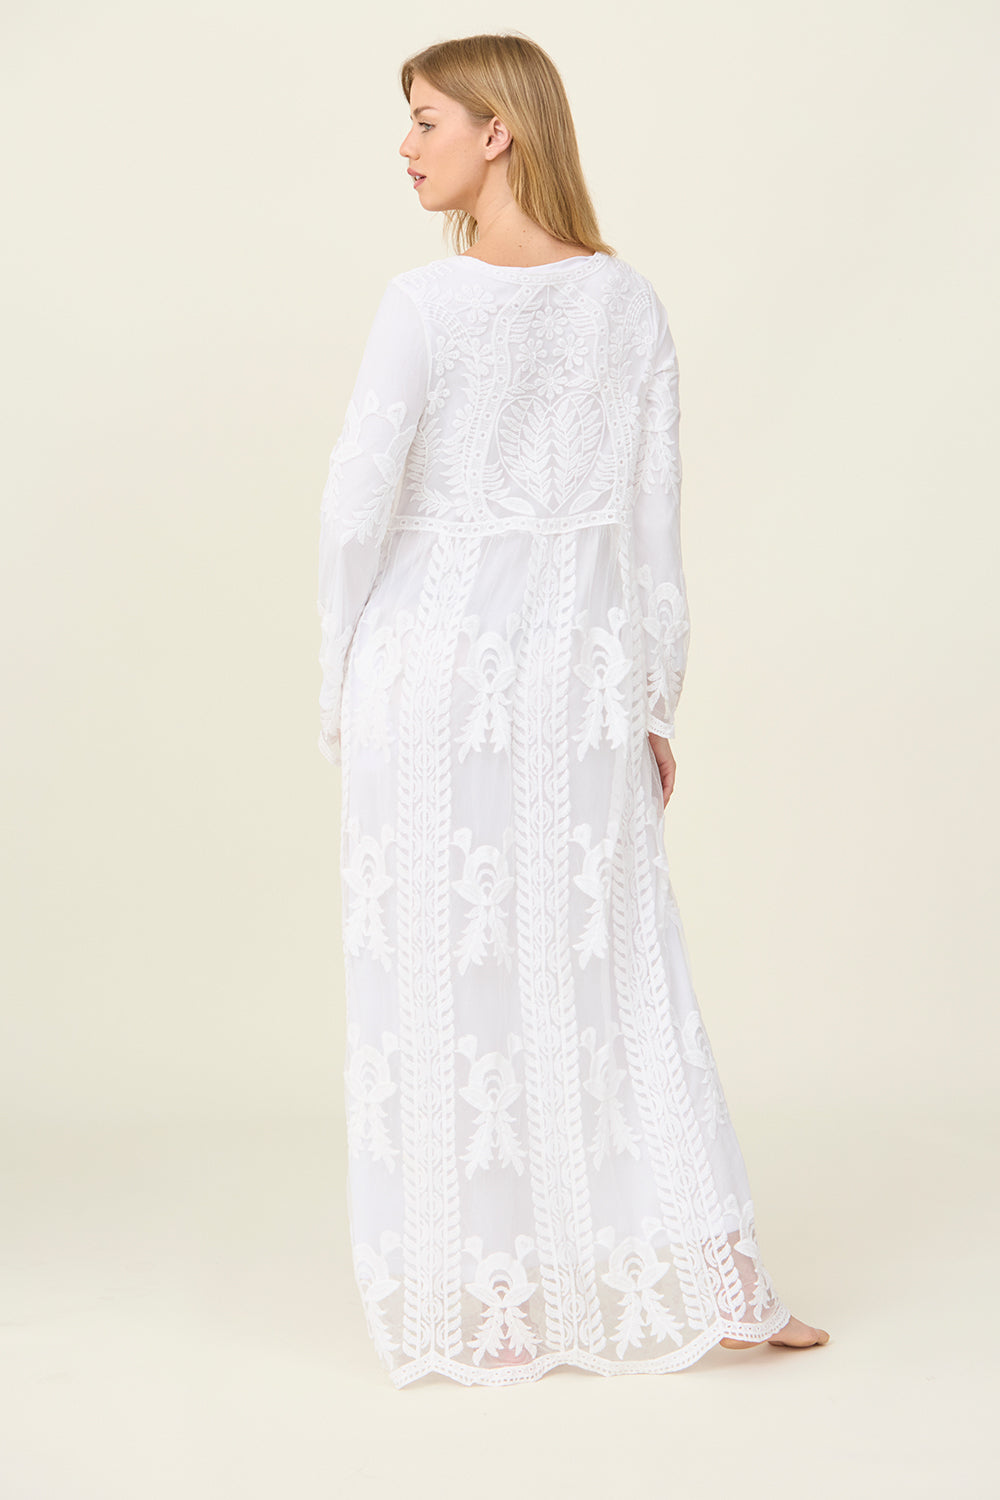 Lacie White Temple / Simple Wedding Dress